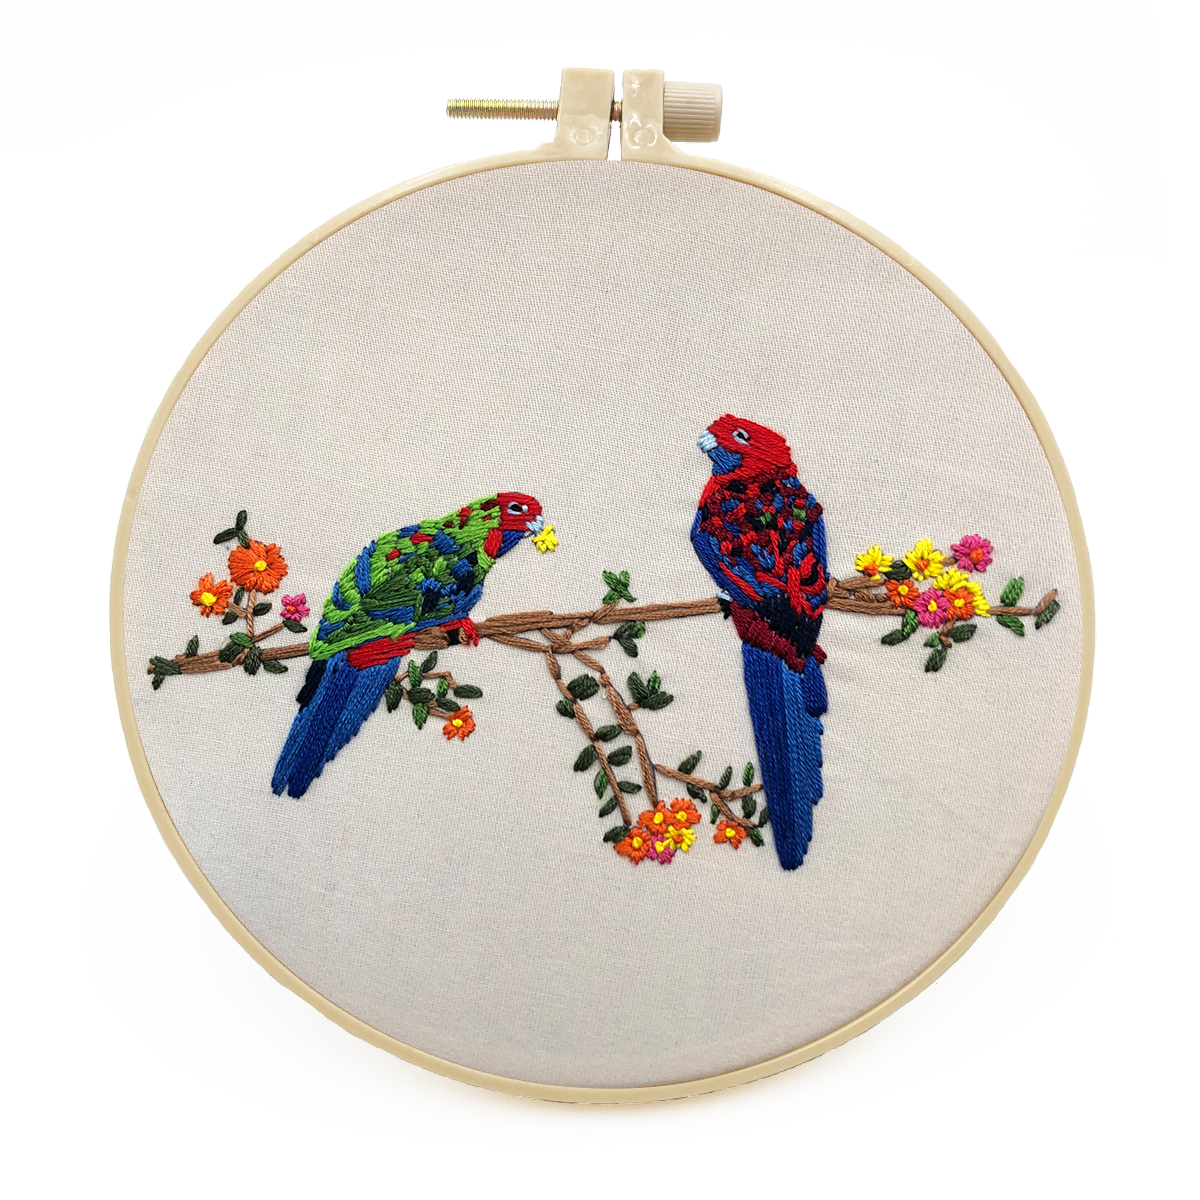 DIY Handmade Embroidery Craft Cross stitch kit Beginner  -Birds in Branch